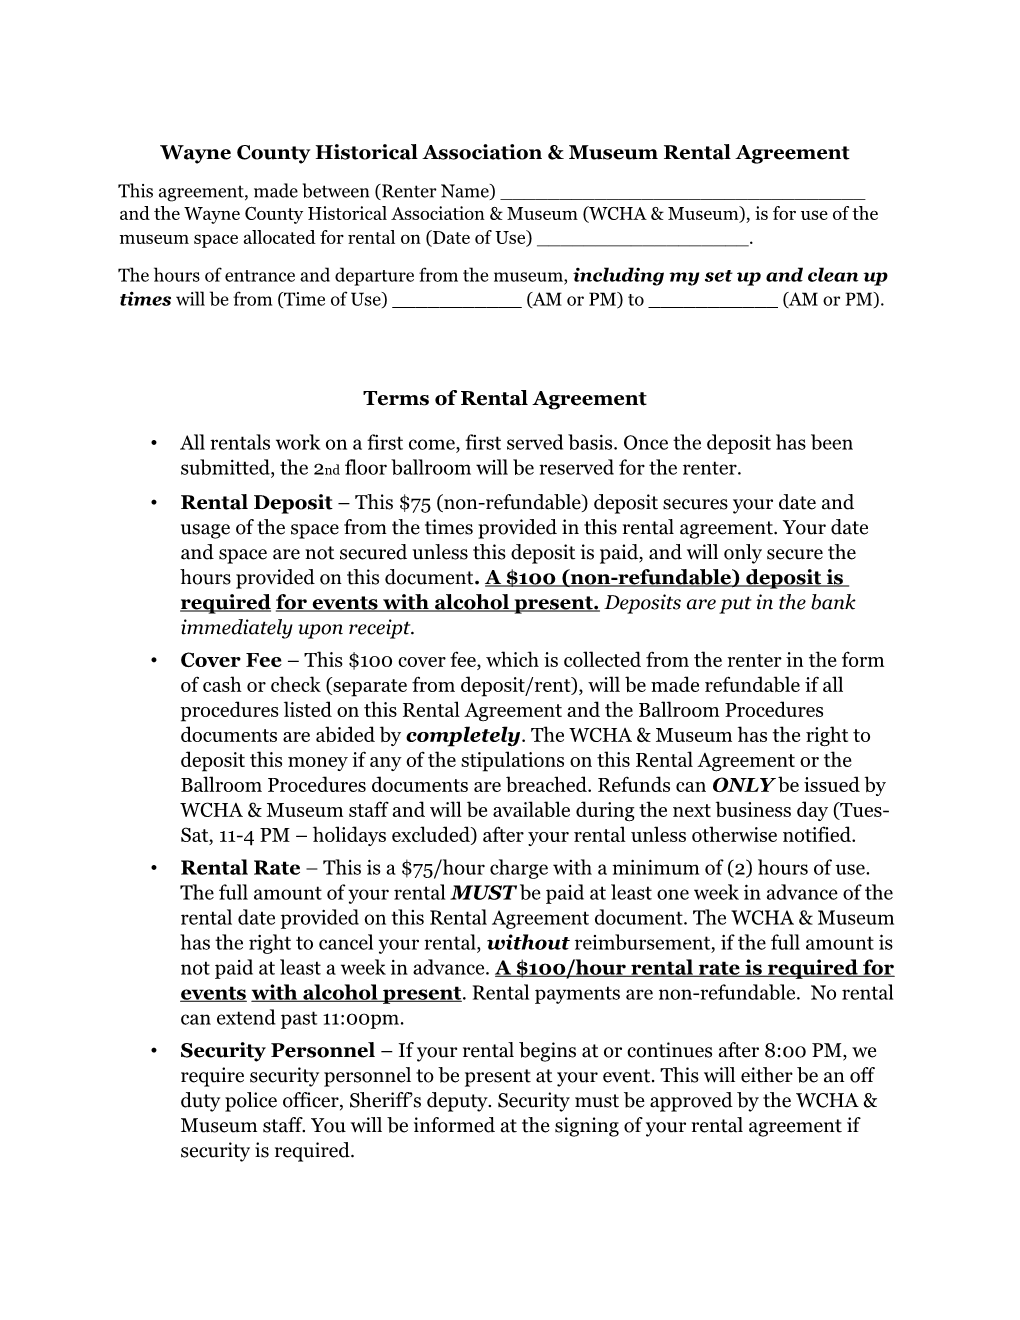 Wayne County Historical Association & Museum Rental Agreement